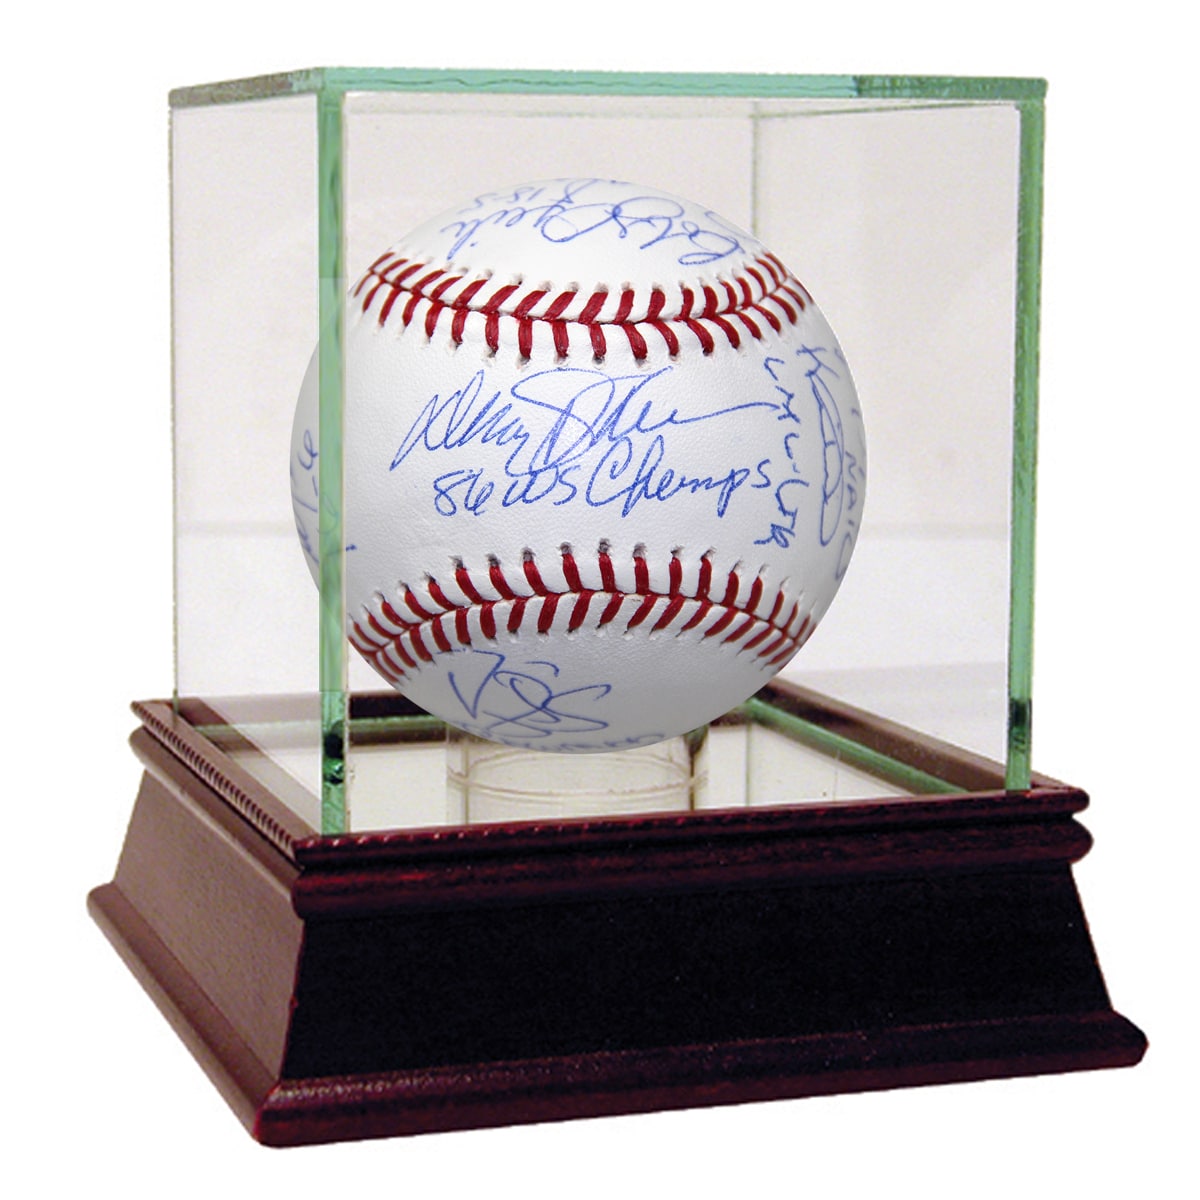 1986 mets autographed baseball